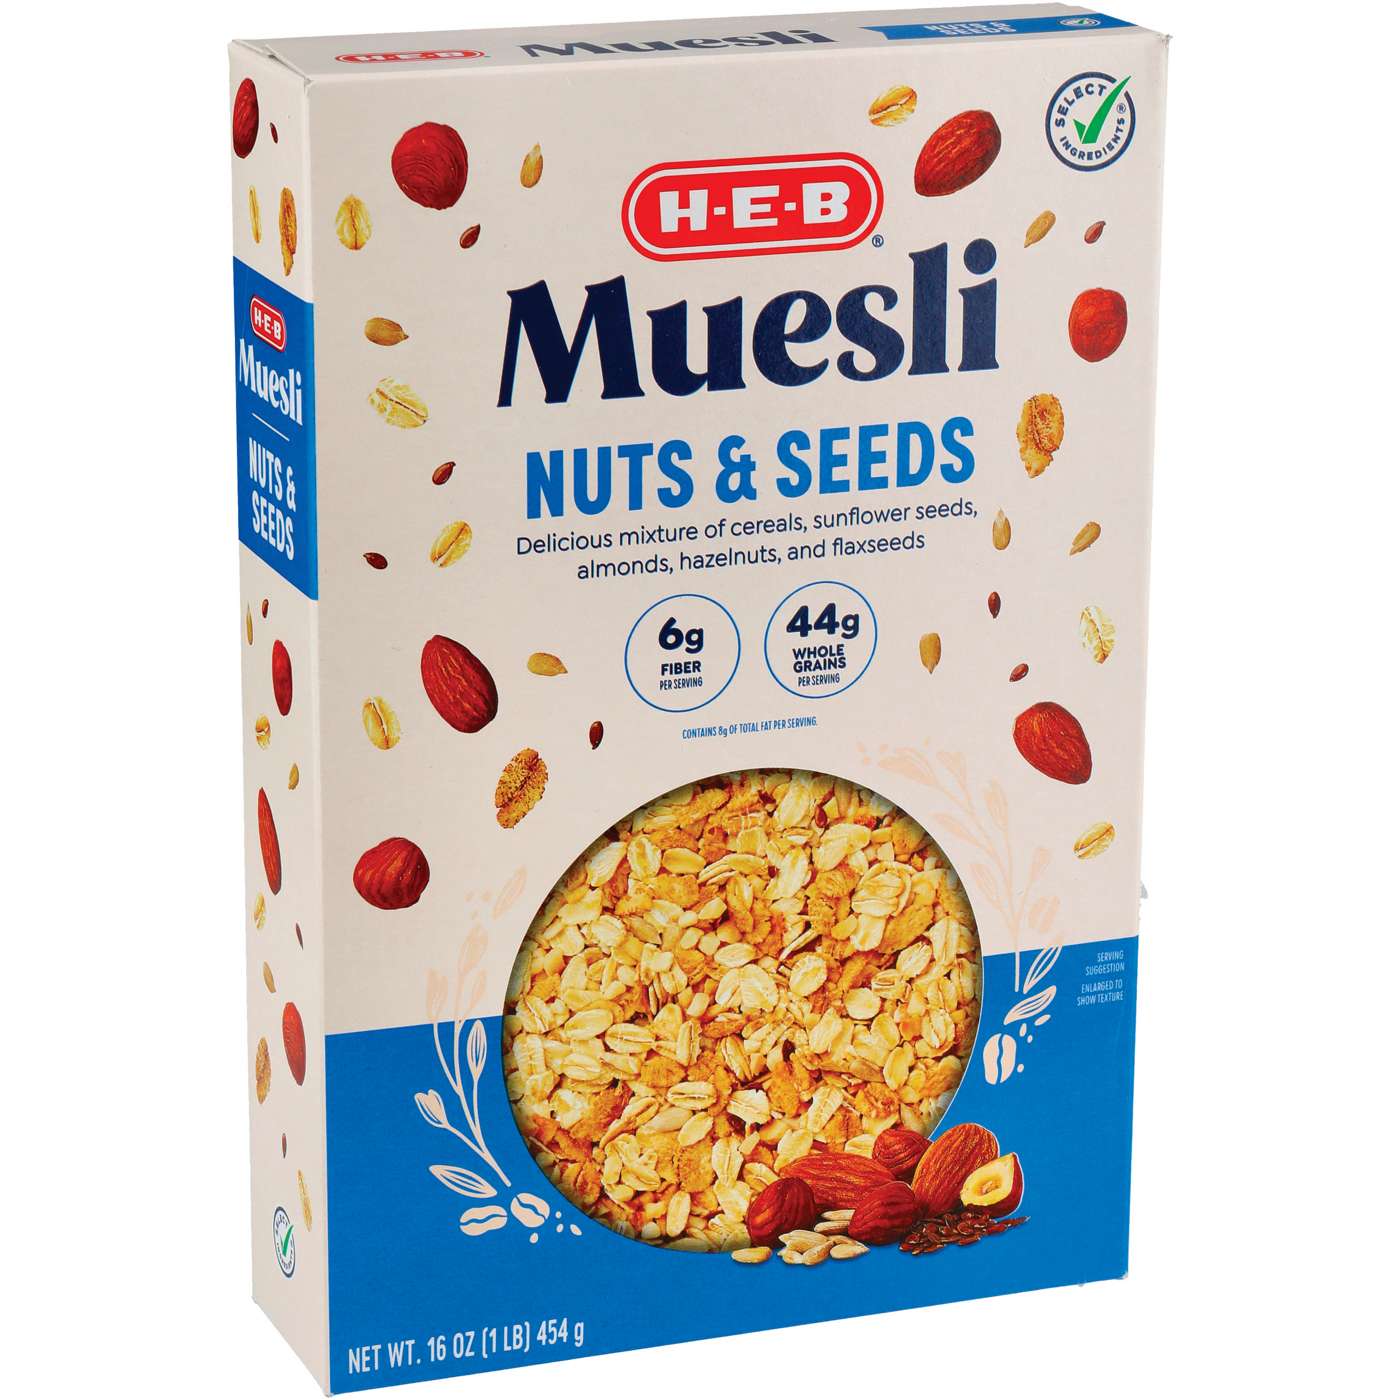 H-E-B Nuts & Seeds Muesli; image 3 of 3